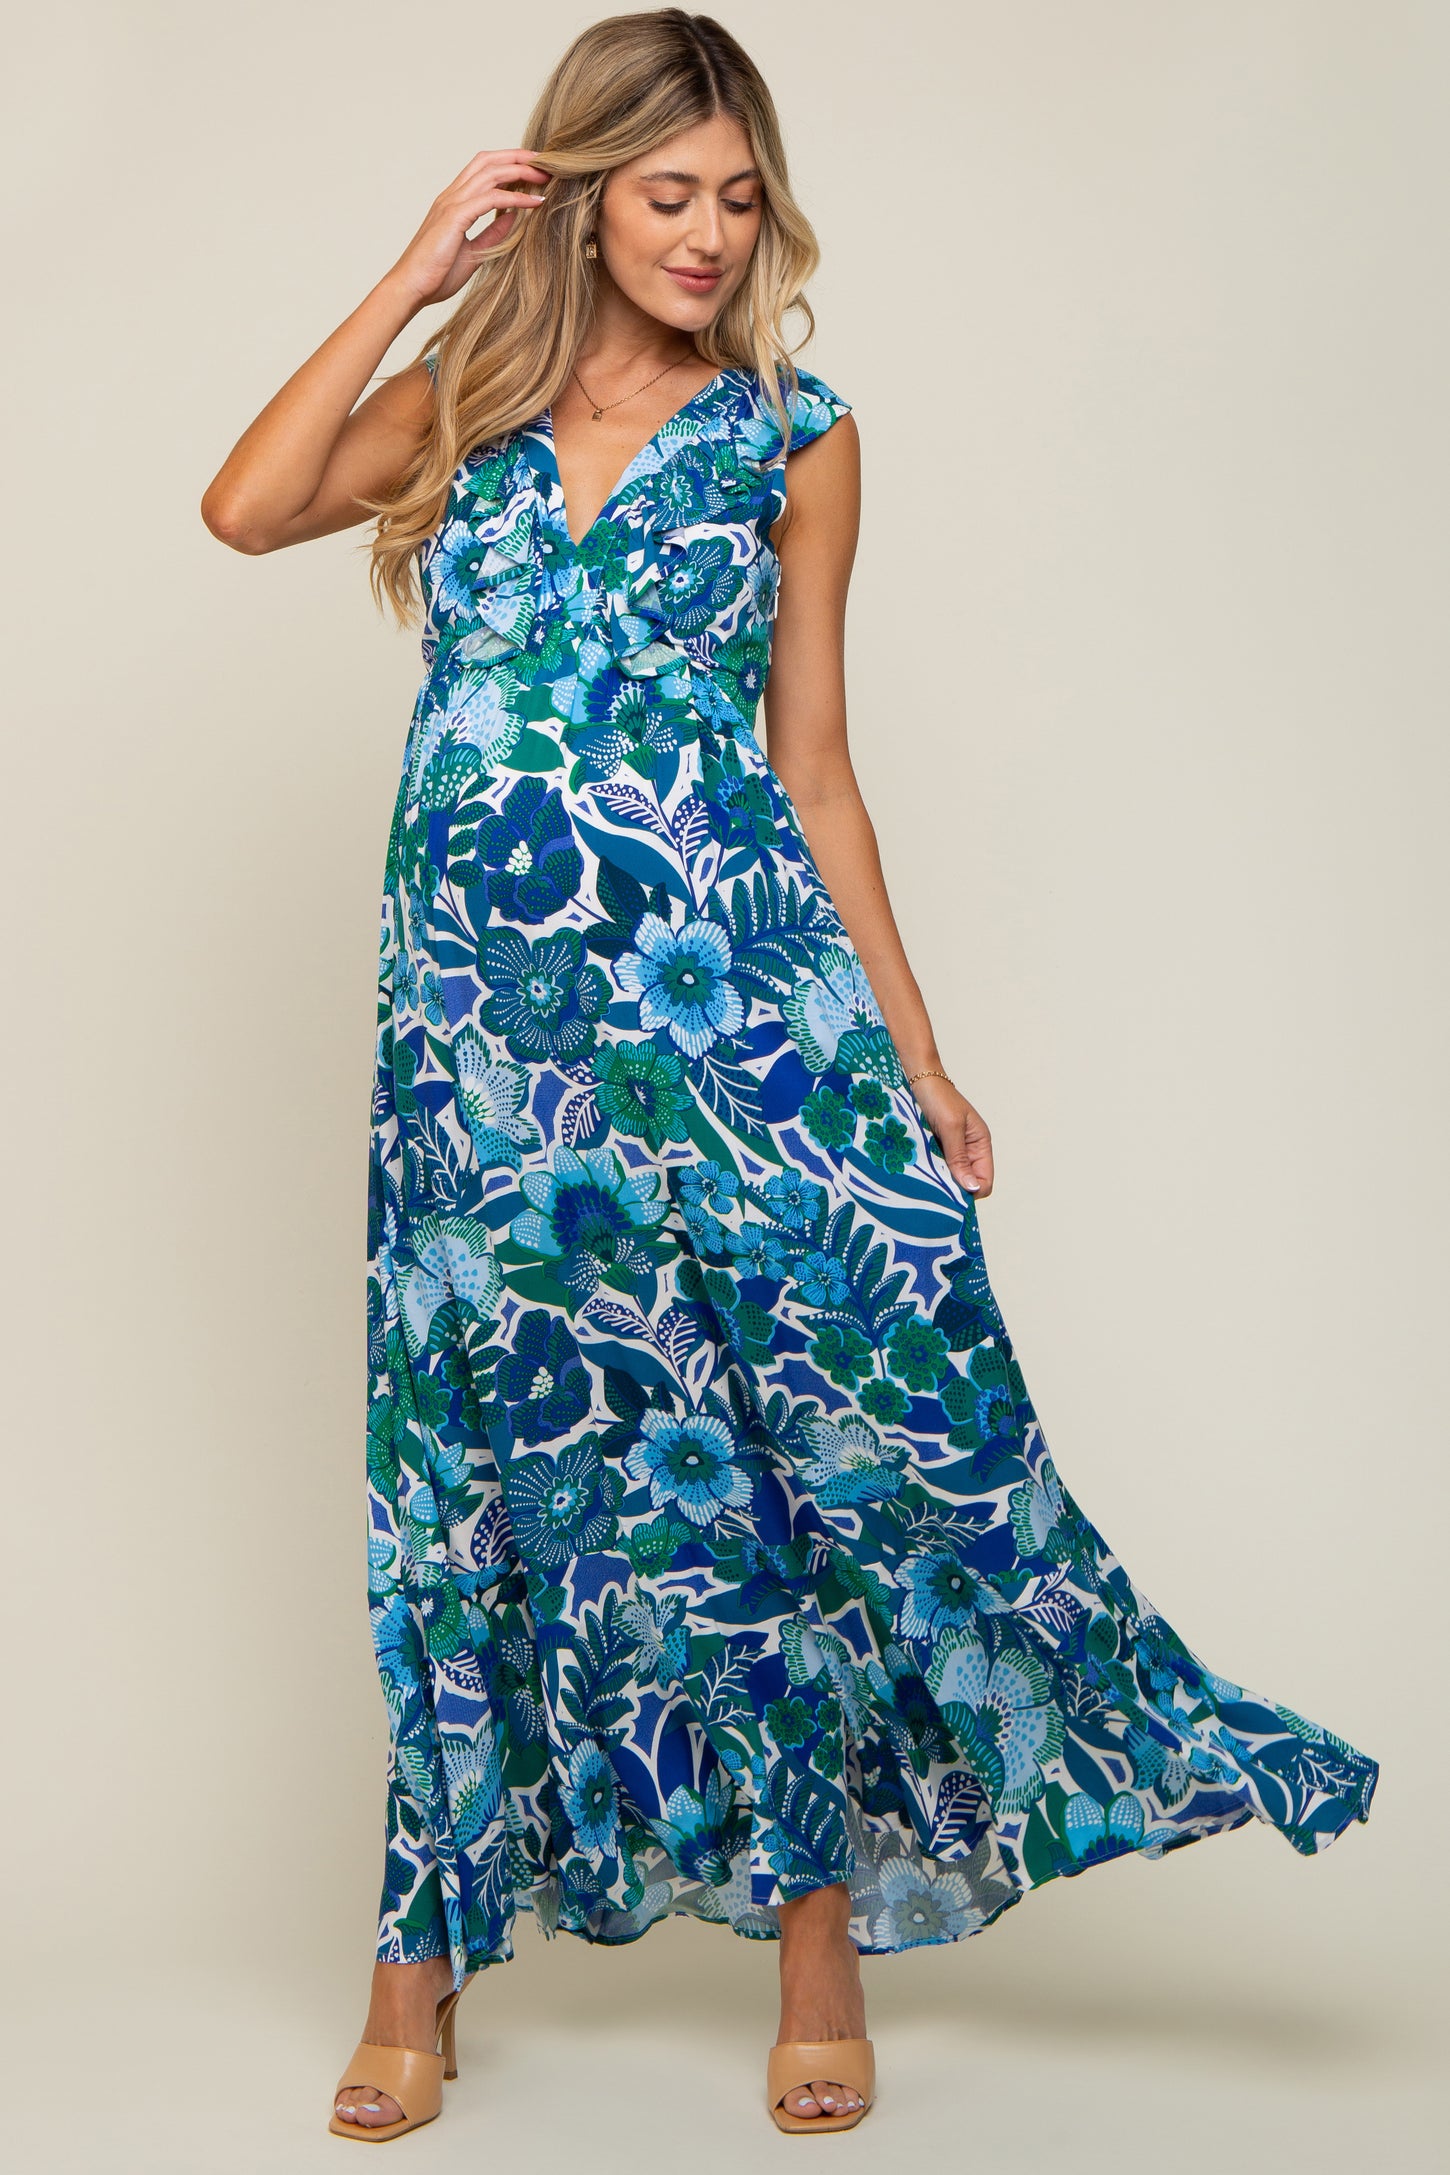 Blue Floral Ruffle Accent Sleeveless Maternity Maxi Dress